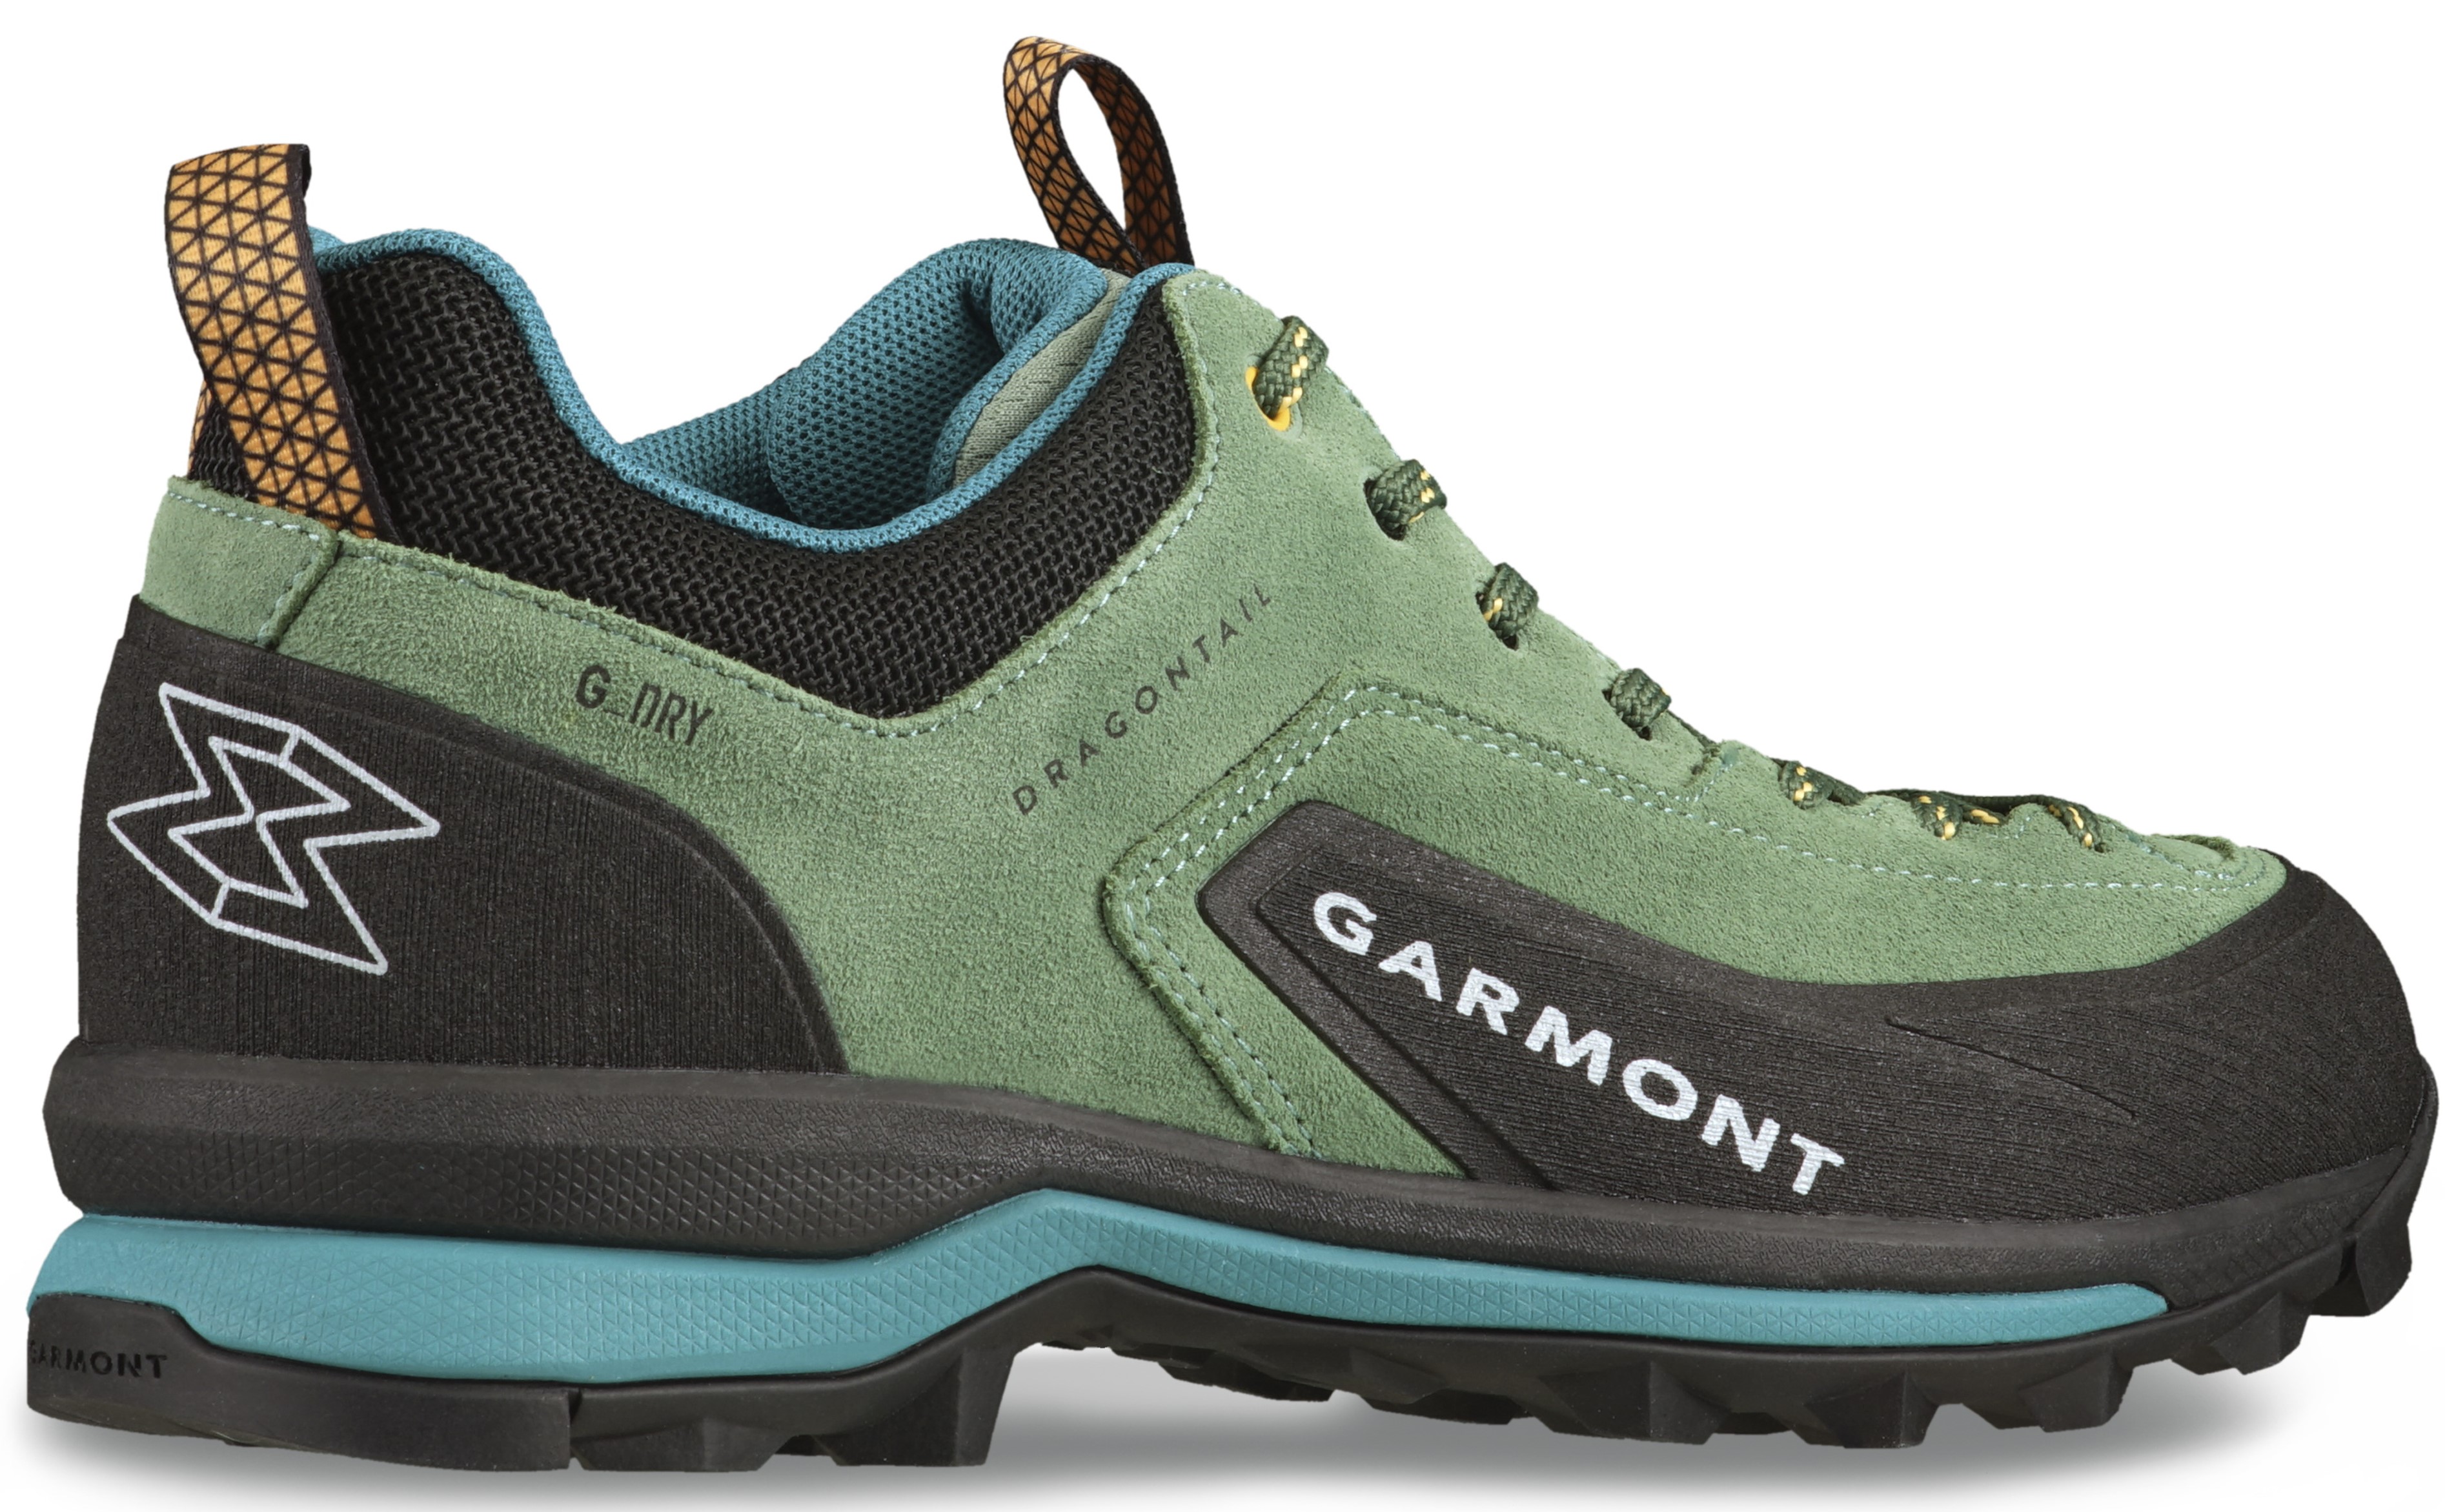 Garmont DRAGONTAIL G-DRY frost green/green Velikost: 39,5 dámské boty